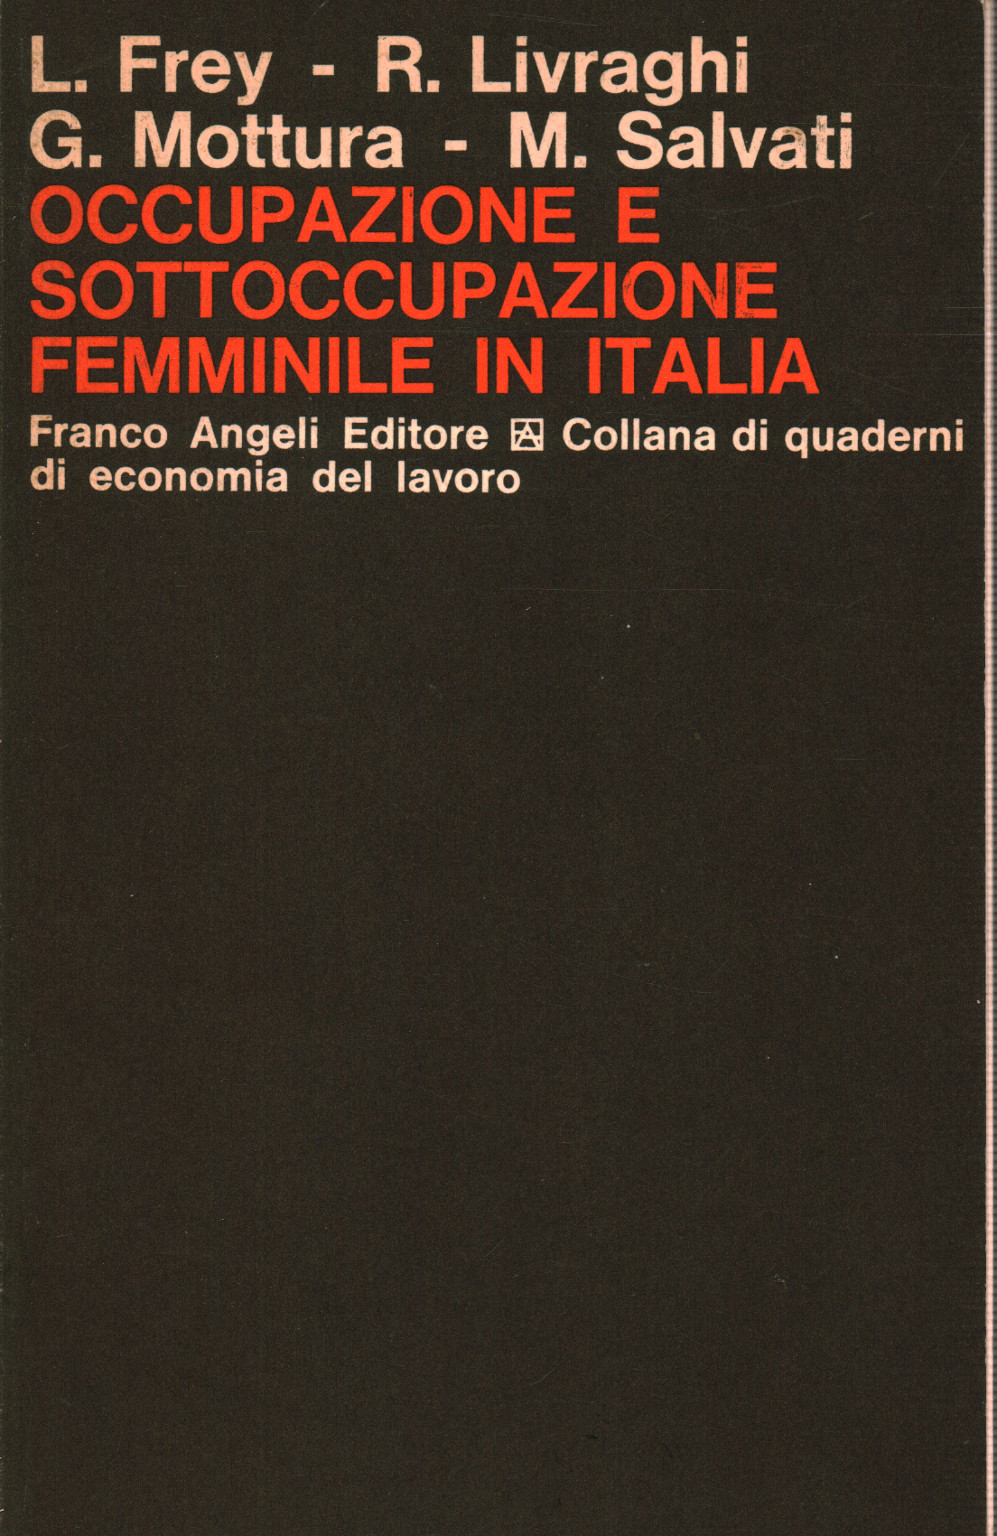 Occupazione e sottoccupazione femminile in Italia, s.a.